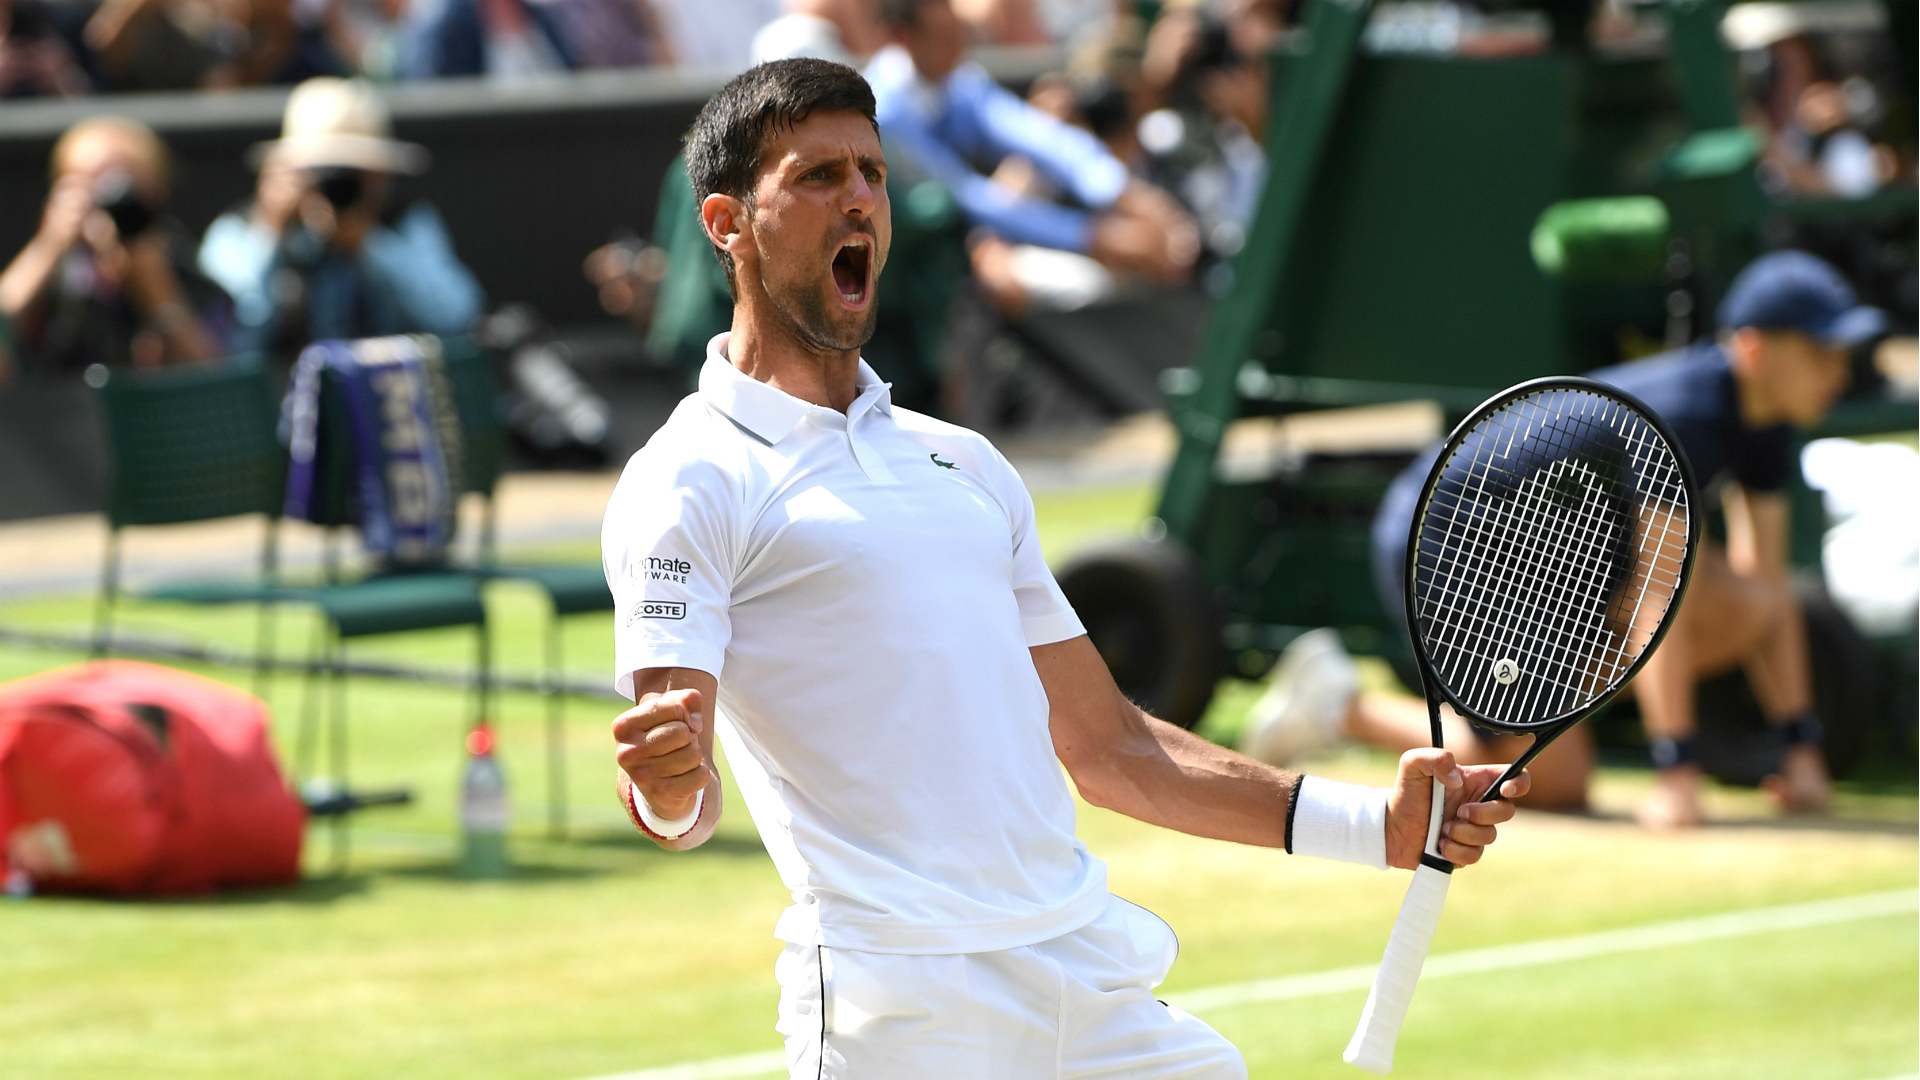 World number one Novak Djokovic overcame a mid-match stumble to reach his sixth Wimbledon final by beating Roberto Bautista Agut.